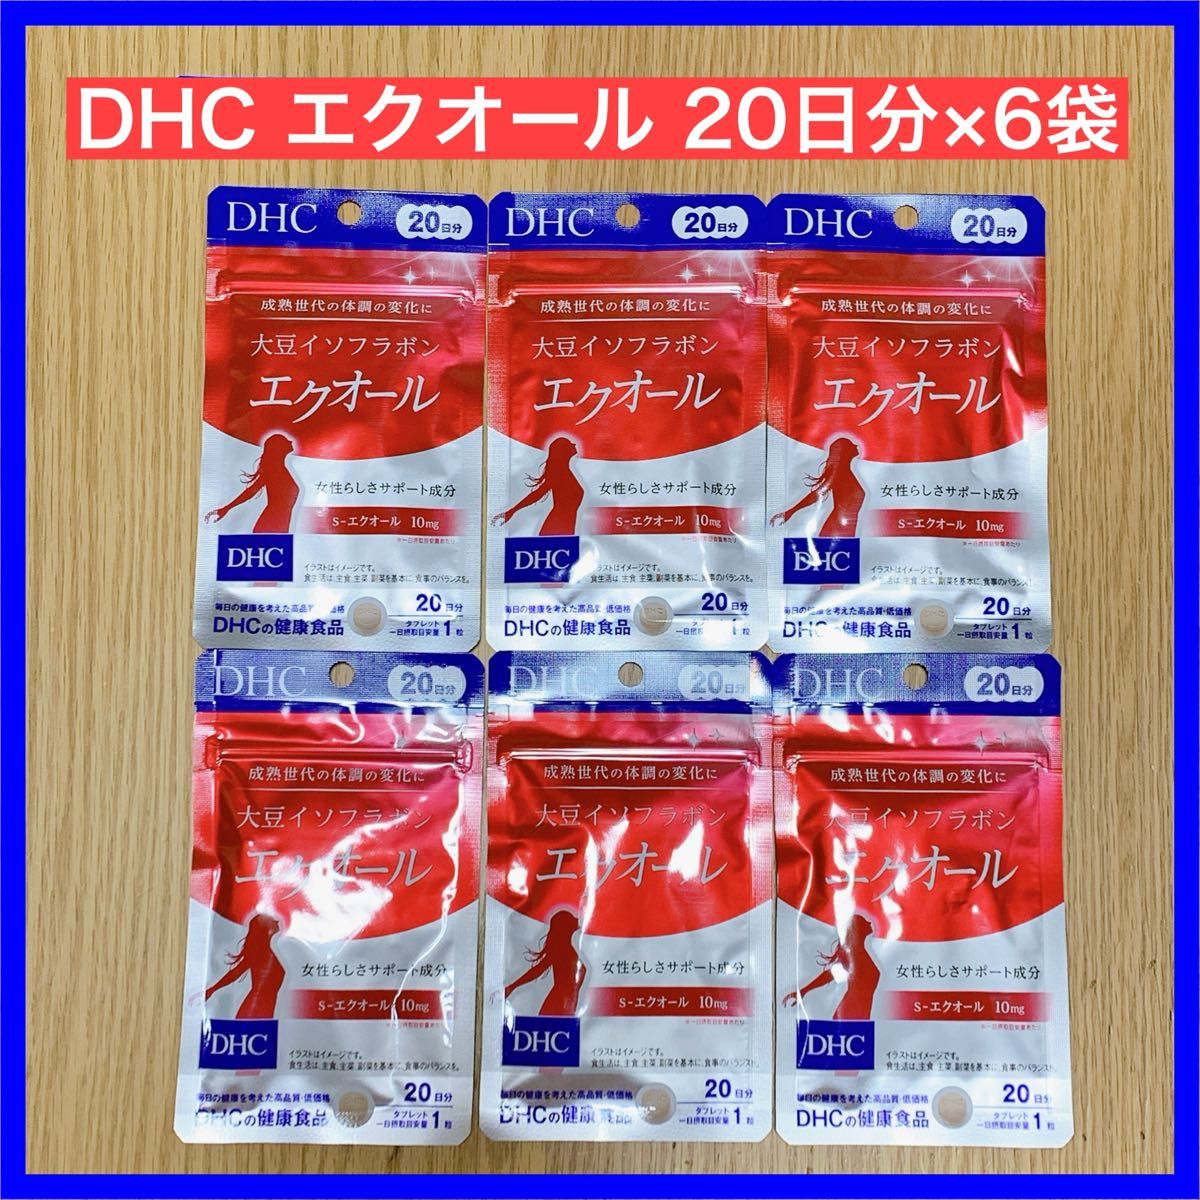 DHC 大豆イソフラボン エクオール 20日分 6袋